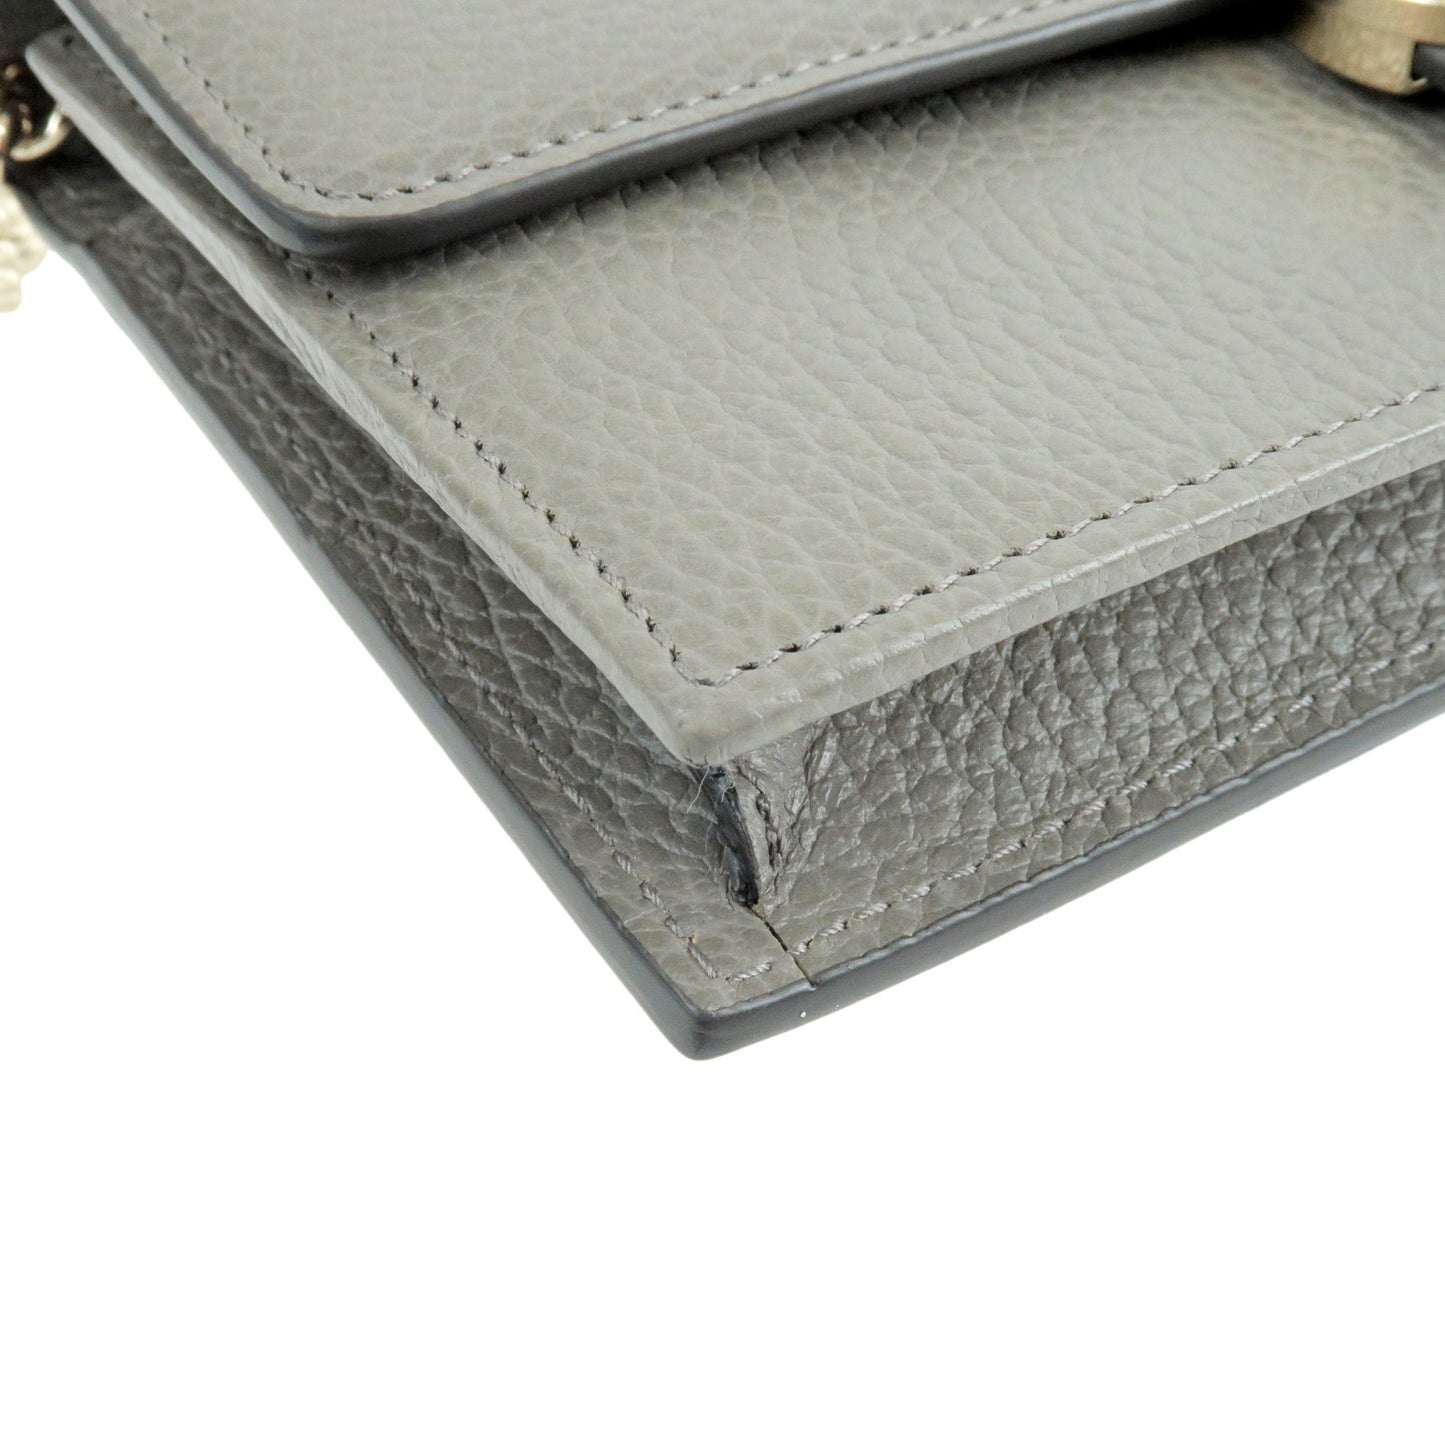 GUCCI Interlocking G Leather Chain Wallet WOC Gray 510314